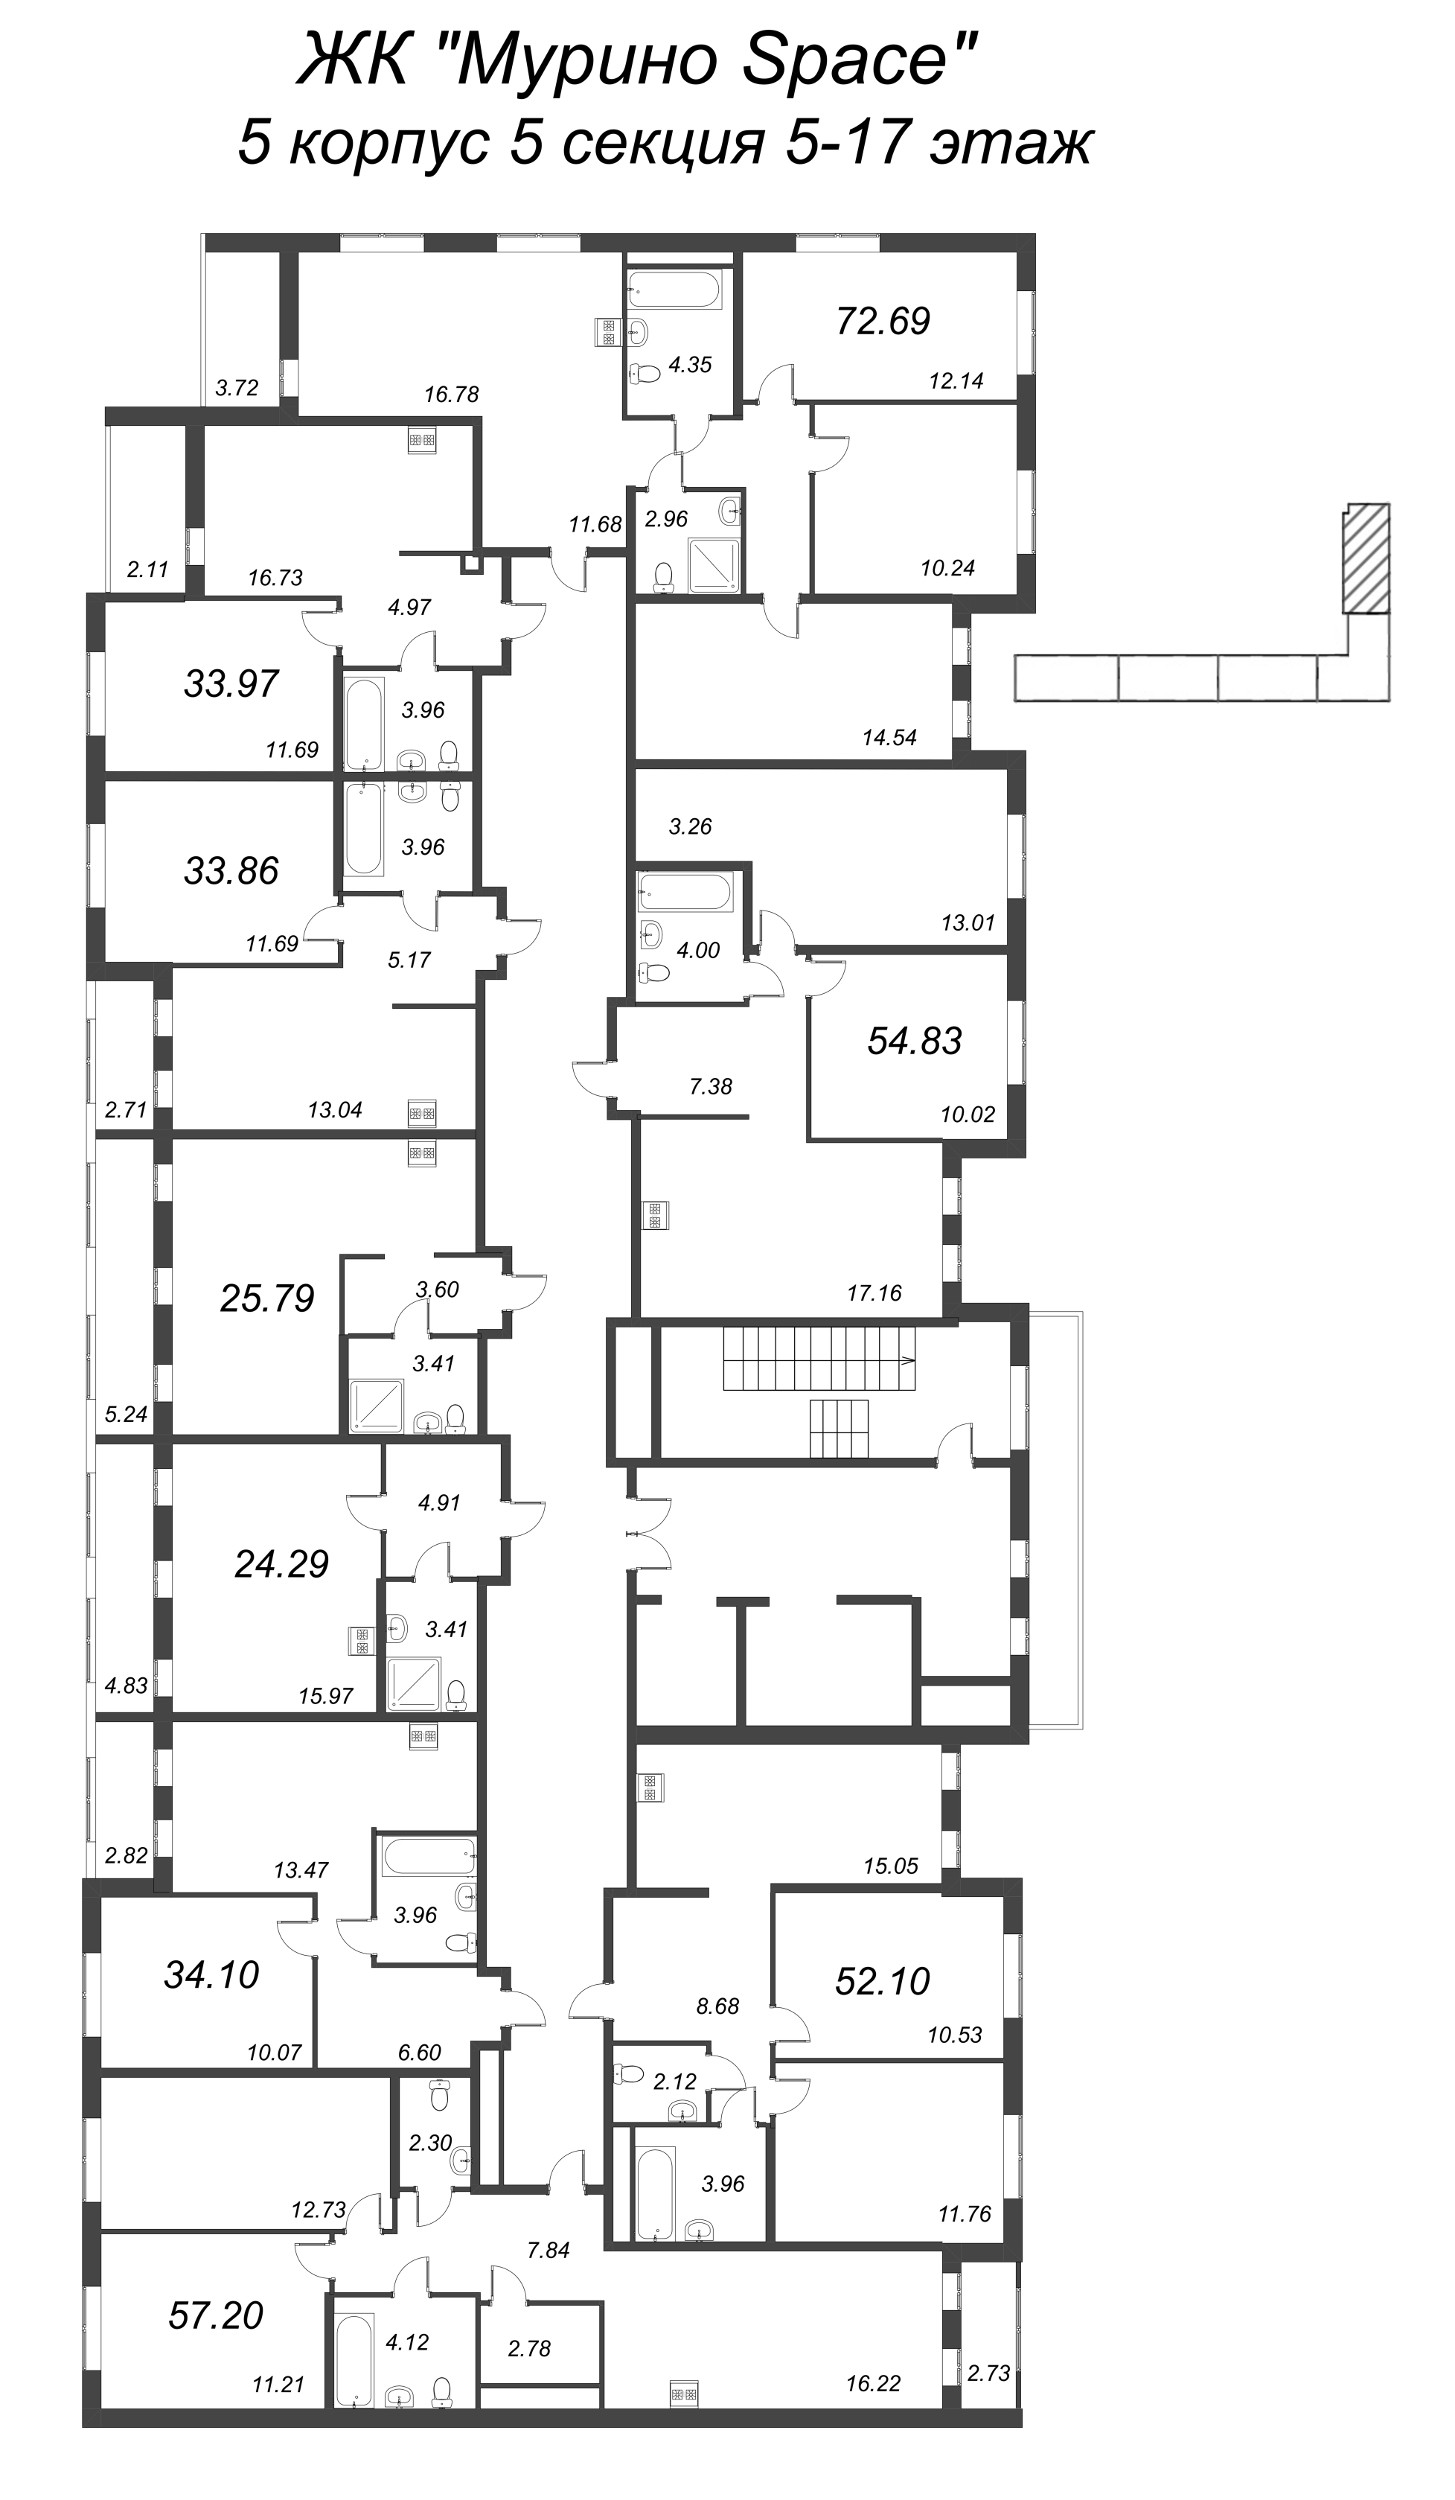 3-комнатная (Евро) квартира, 54.83 м² в ЖК "Мурино Space" - планировка этажа